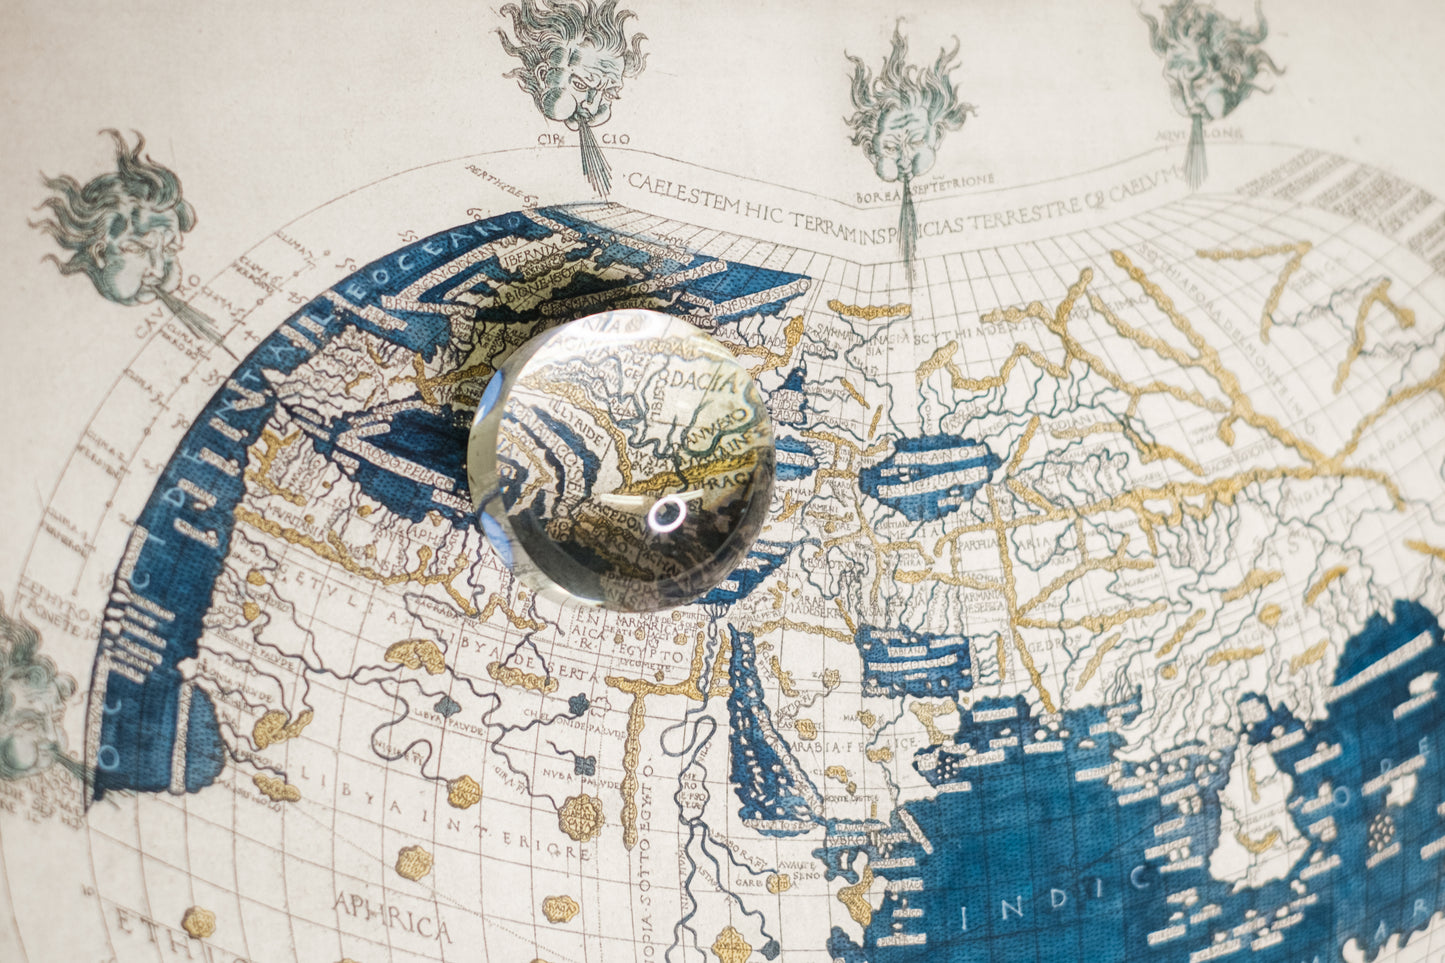 Hand coloured intaglio print of Francesco Berlinghieri's World Map, 1482